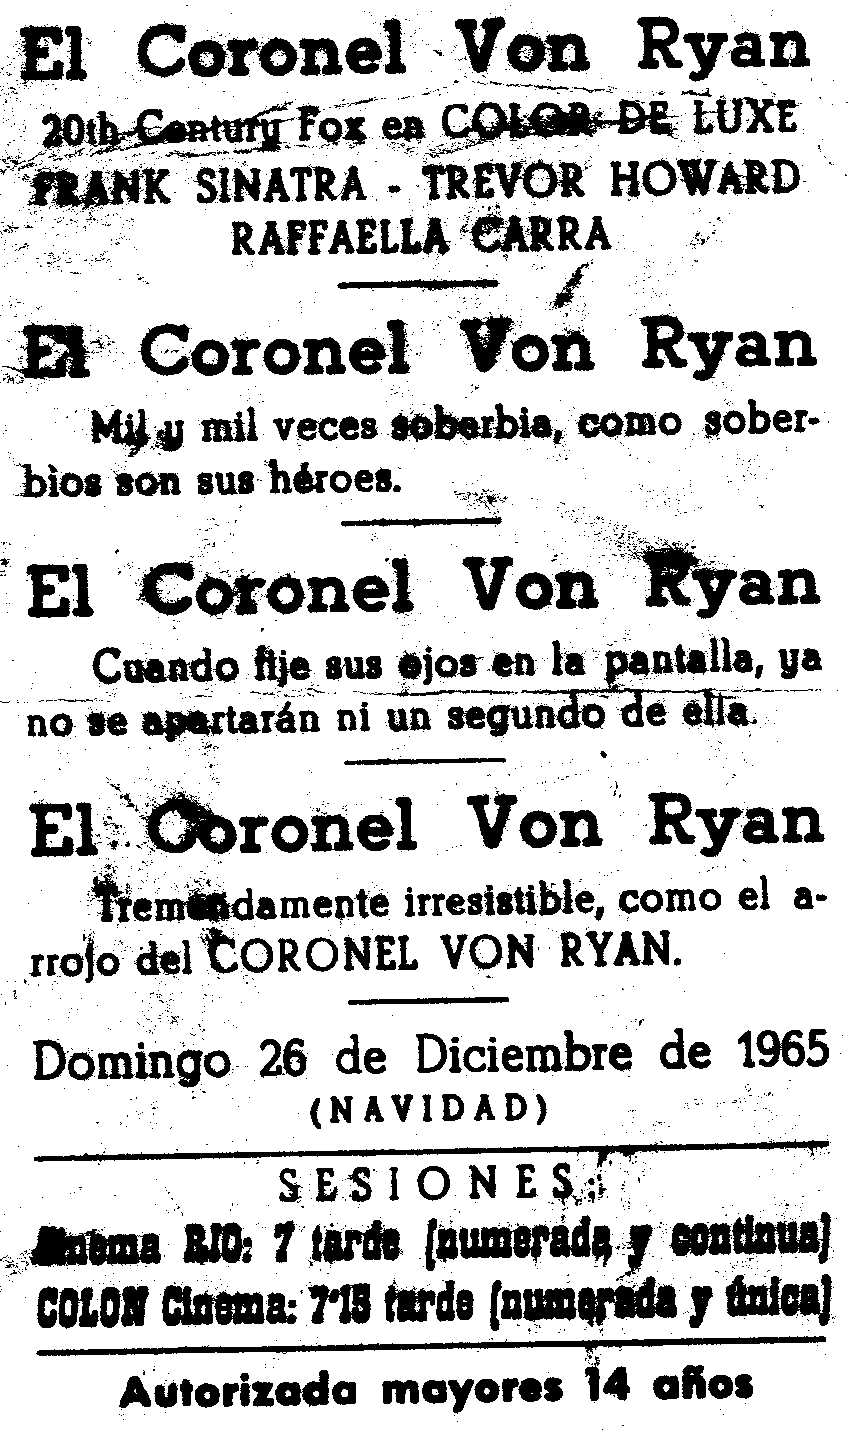 [EL+CORONEL+VON+RYAN-B+1965.jpg]